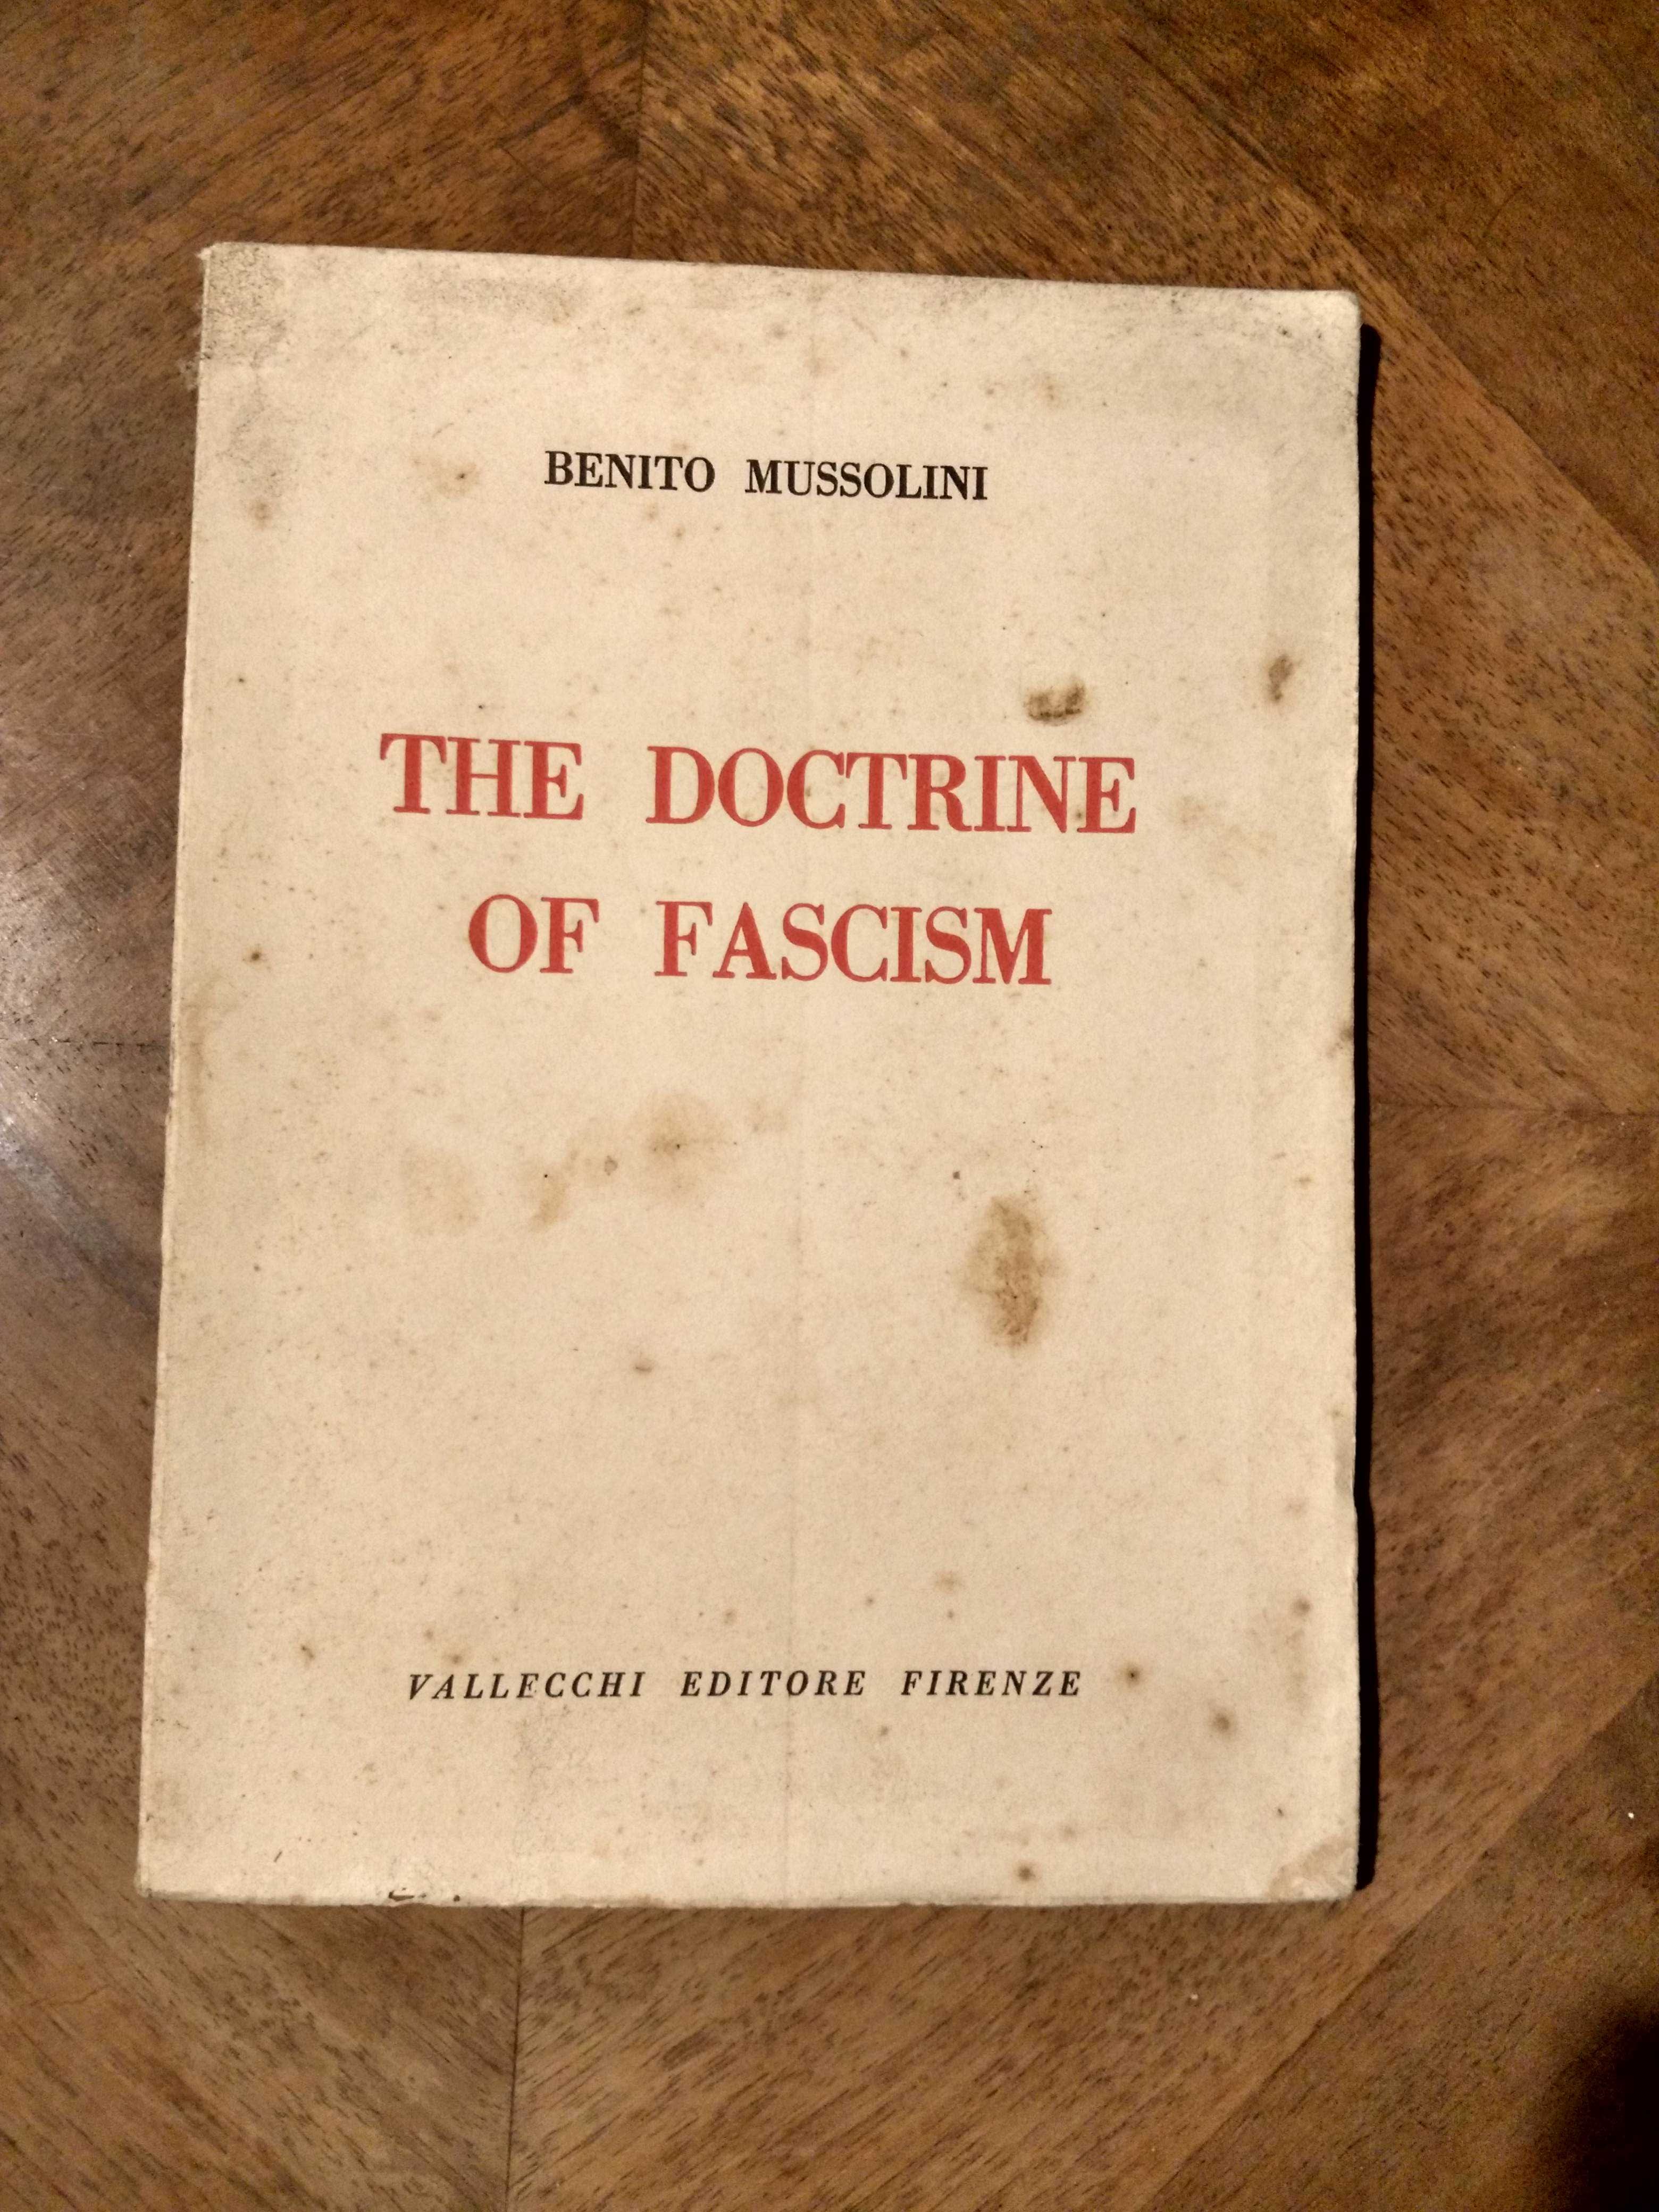 “The Doctrine of Fascism” (1935) - Benito Mussolini